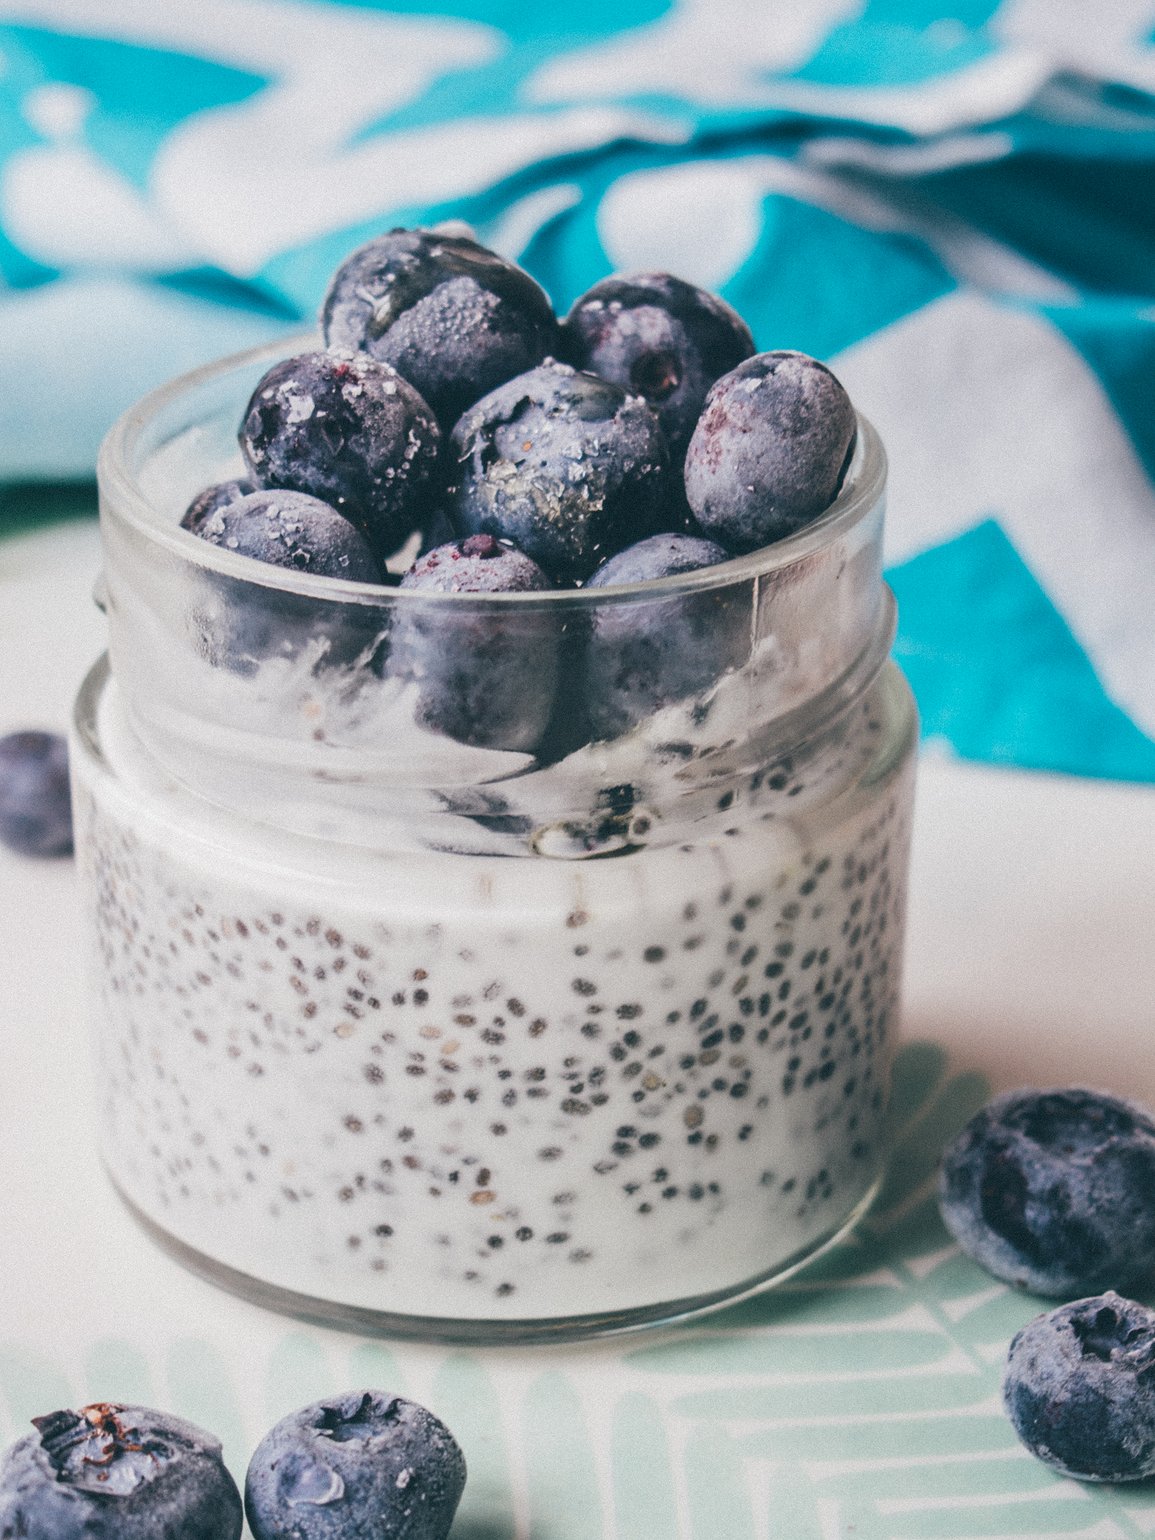 blueberries dessert - Photo by agnieszka bladzik - Tookapic